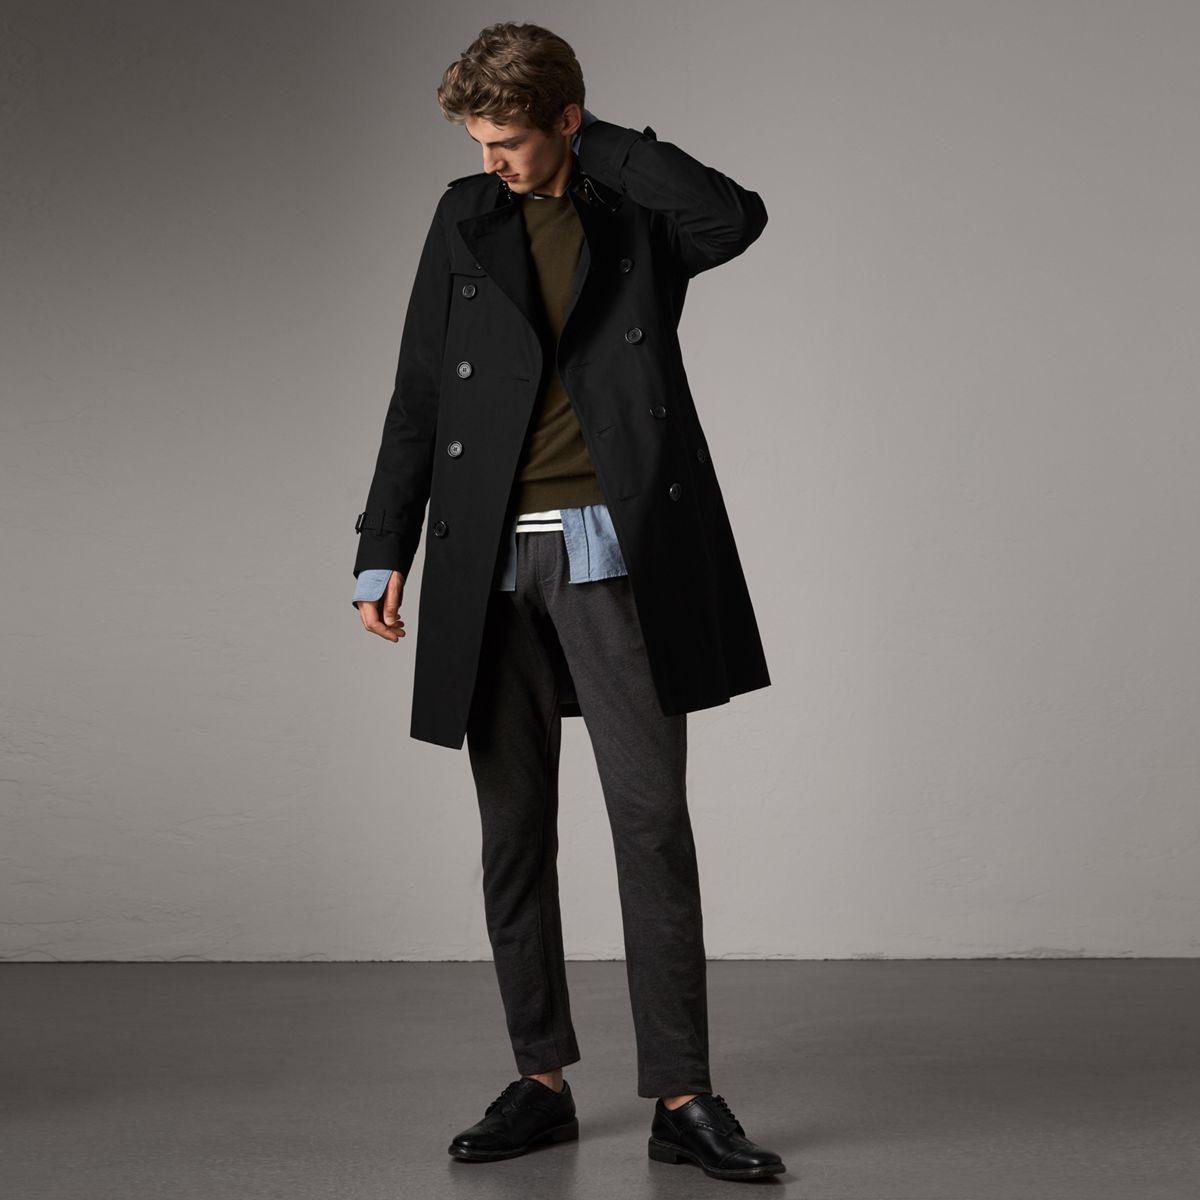 Burberry Cotton The Kensington – Long Trench Coat in Black for Men - Lyst